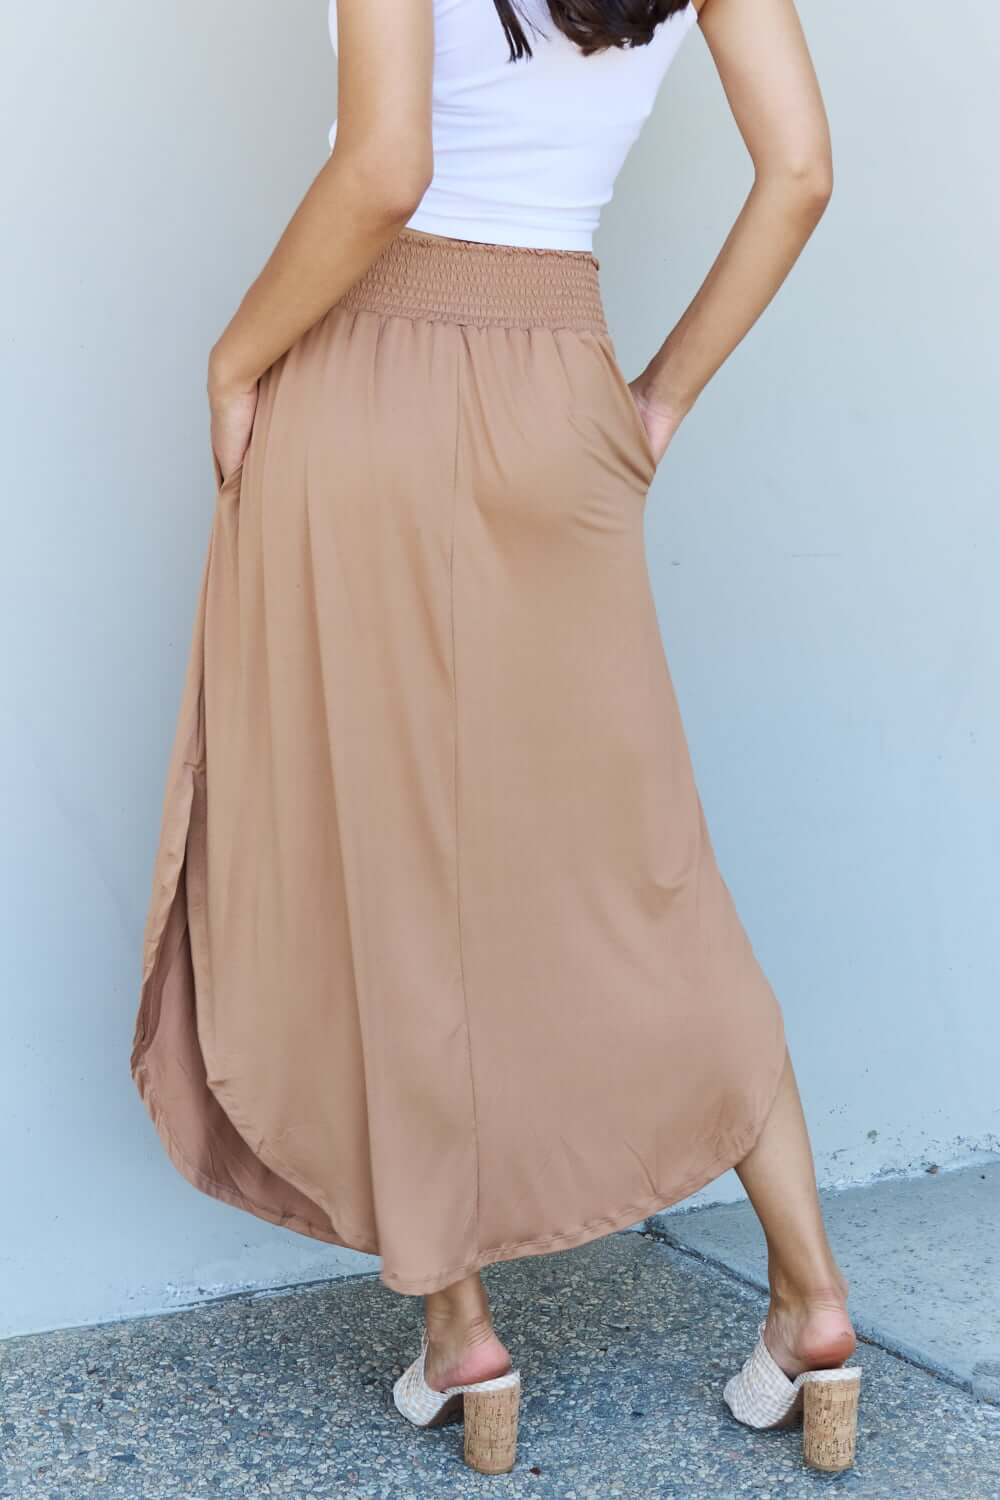 DOUBLJU Comfort Princess Full Size High Waist Scoop Hem Maxi Skirt in Tan at Bella Road